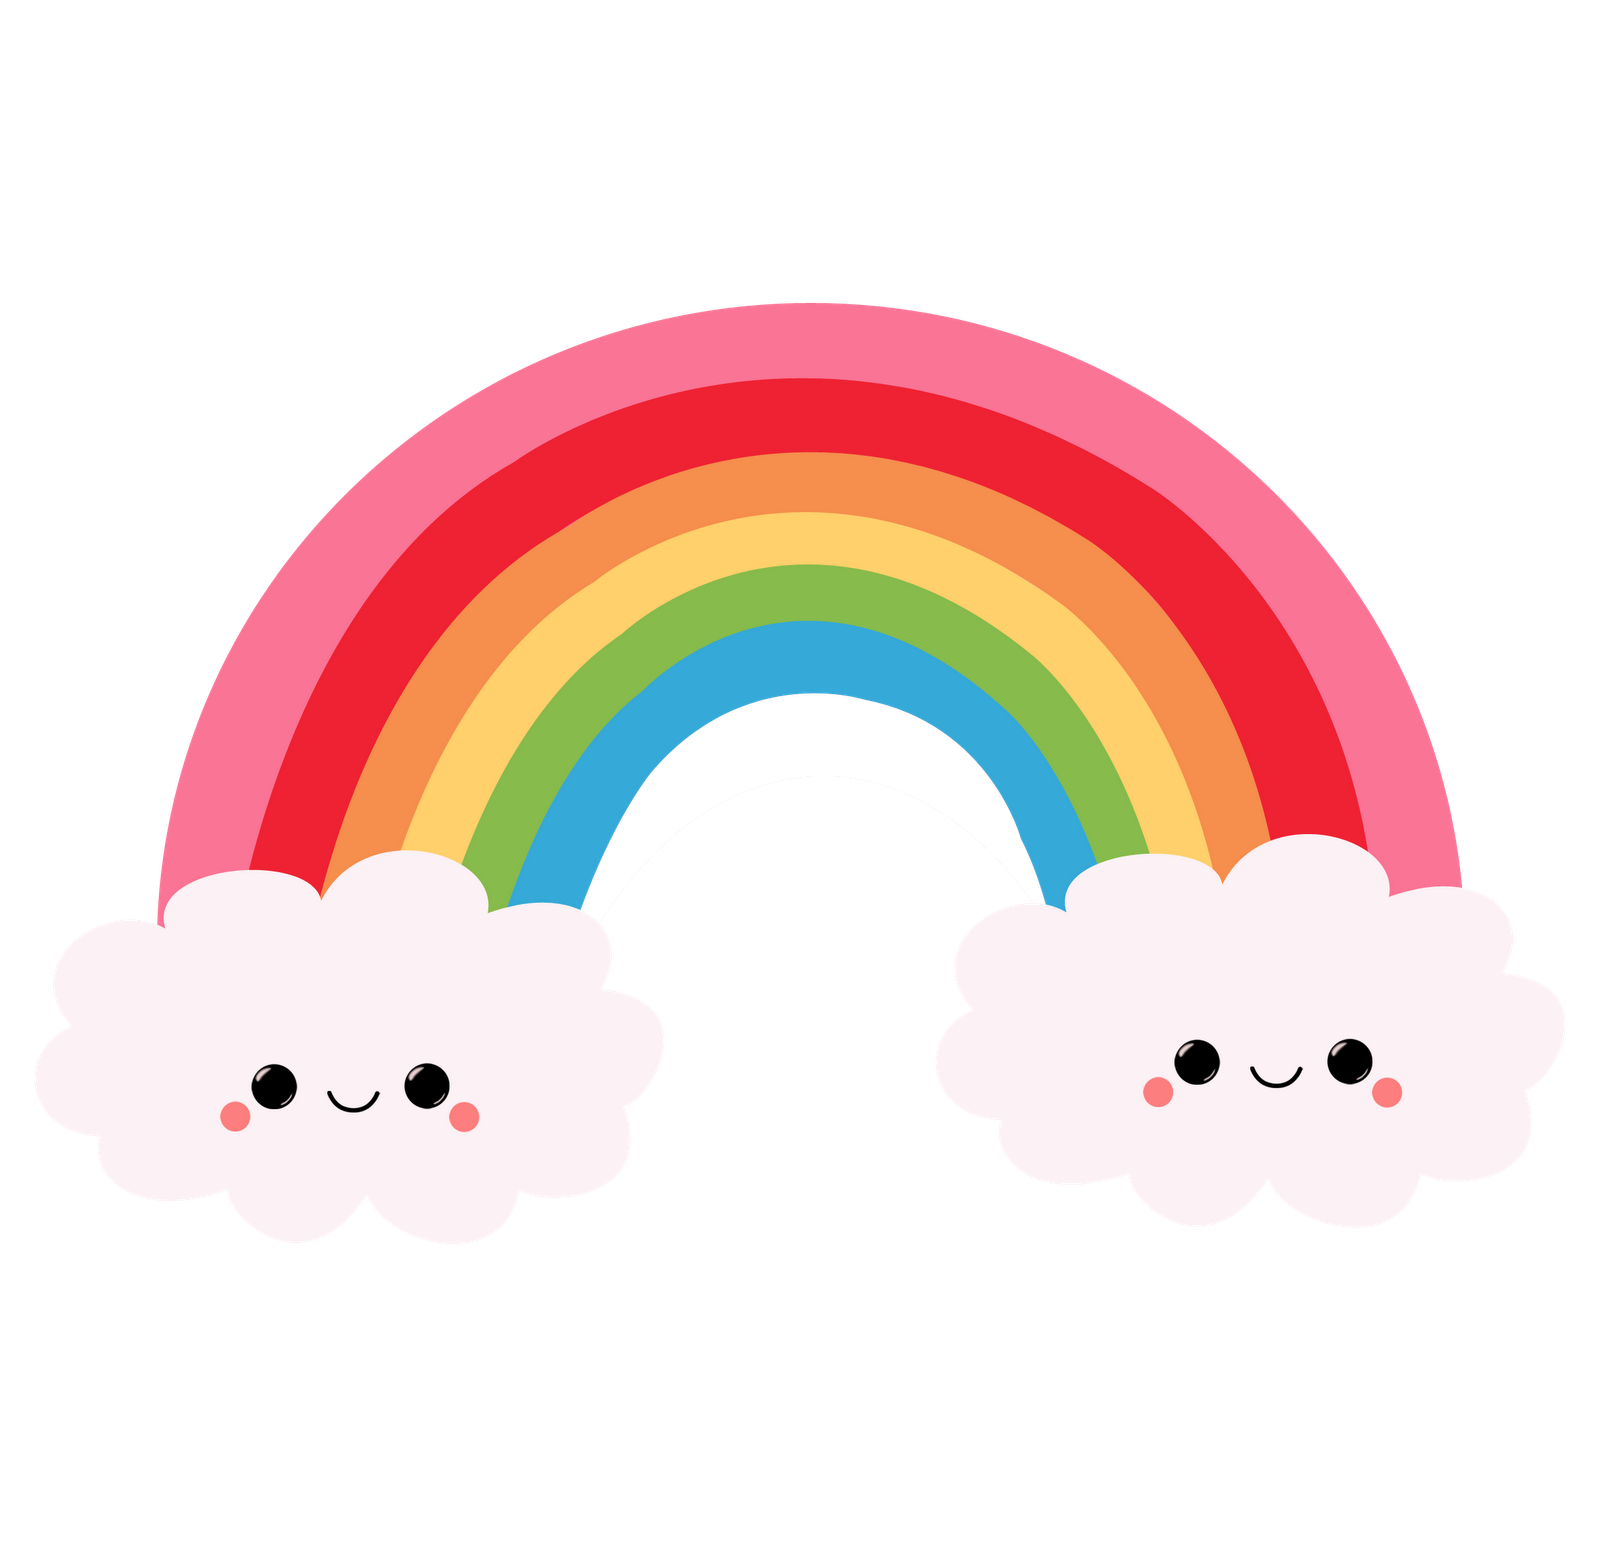 Free Cute Rainbow Png, Download Free Clip Art, Free Clip Art